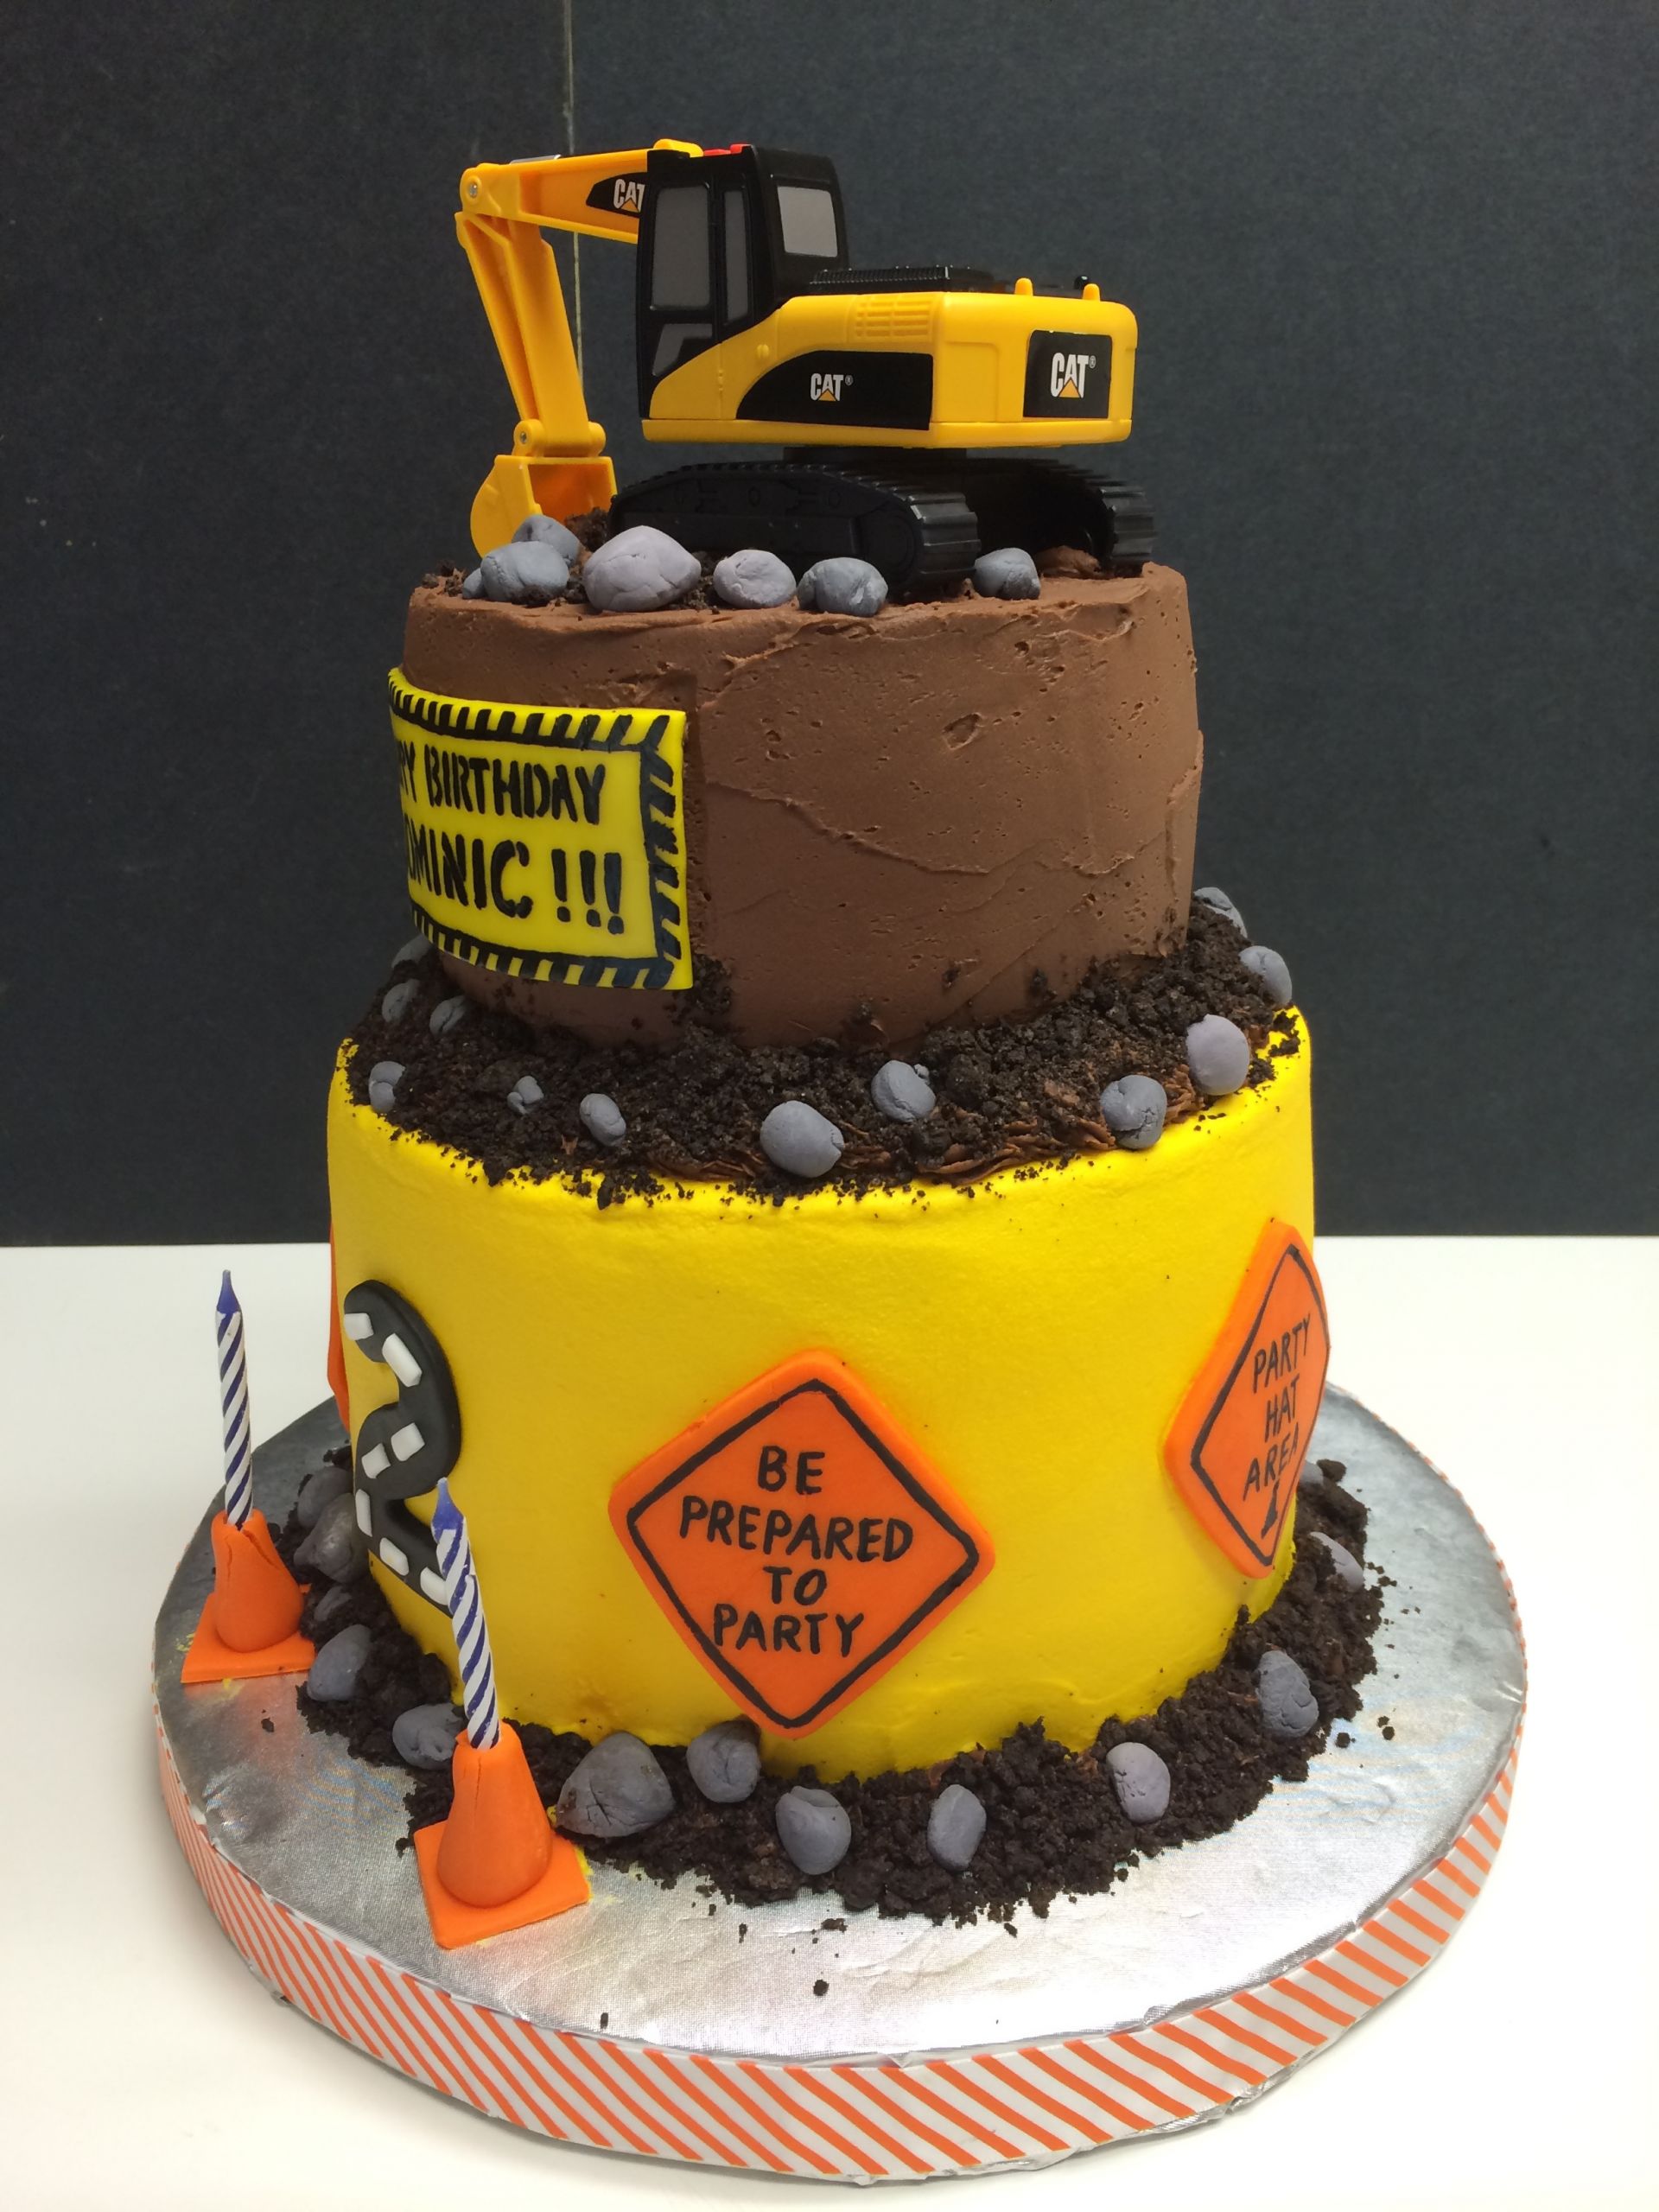 Top 15 Most Popular Construction Birthday Cake